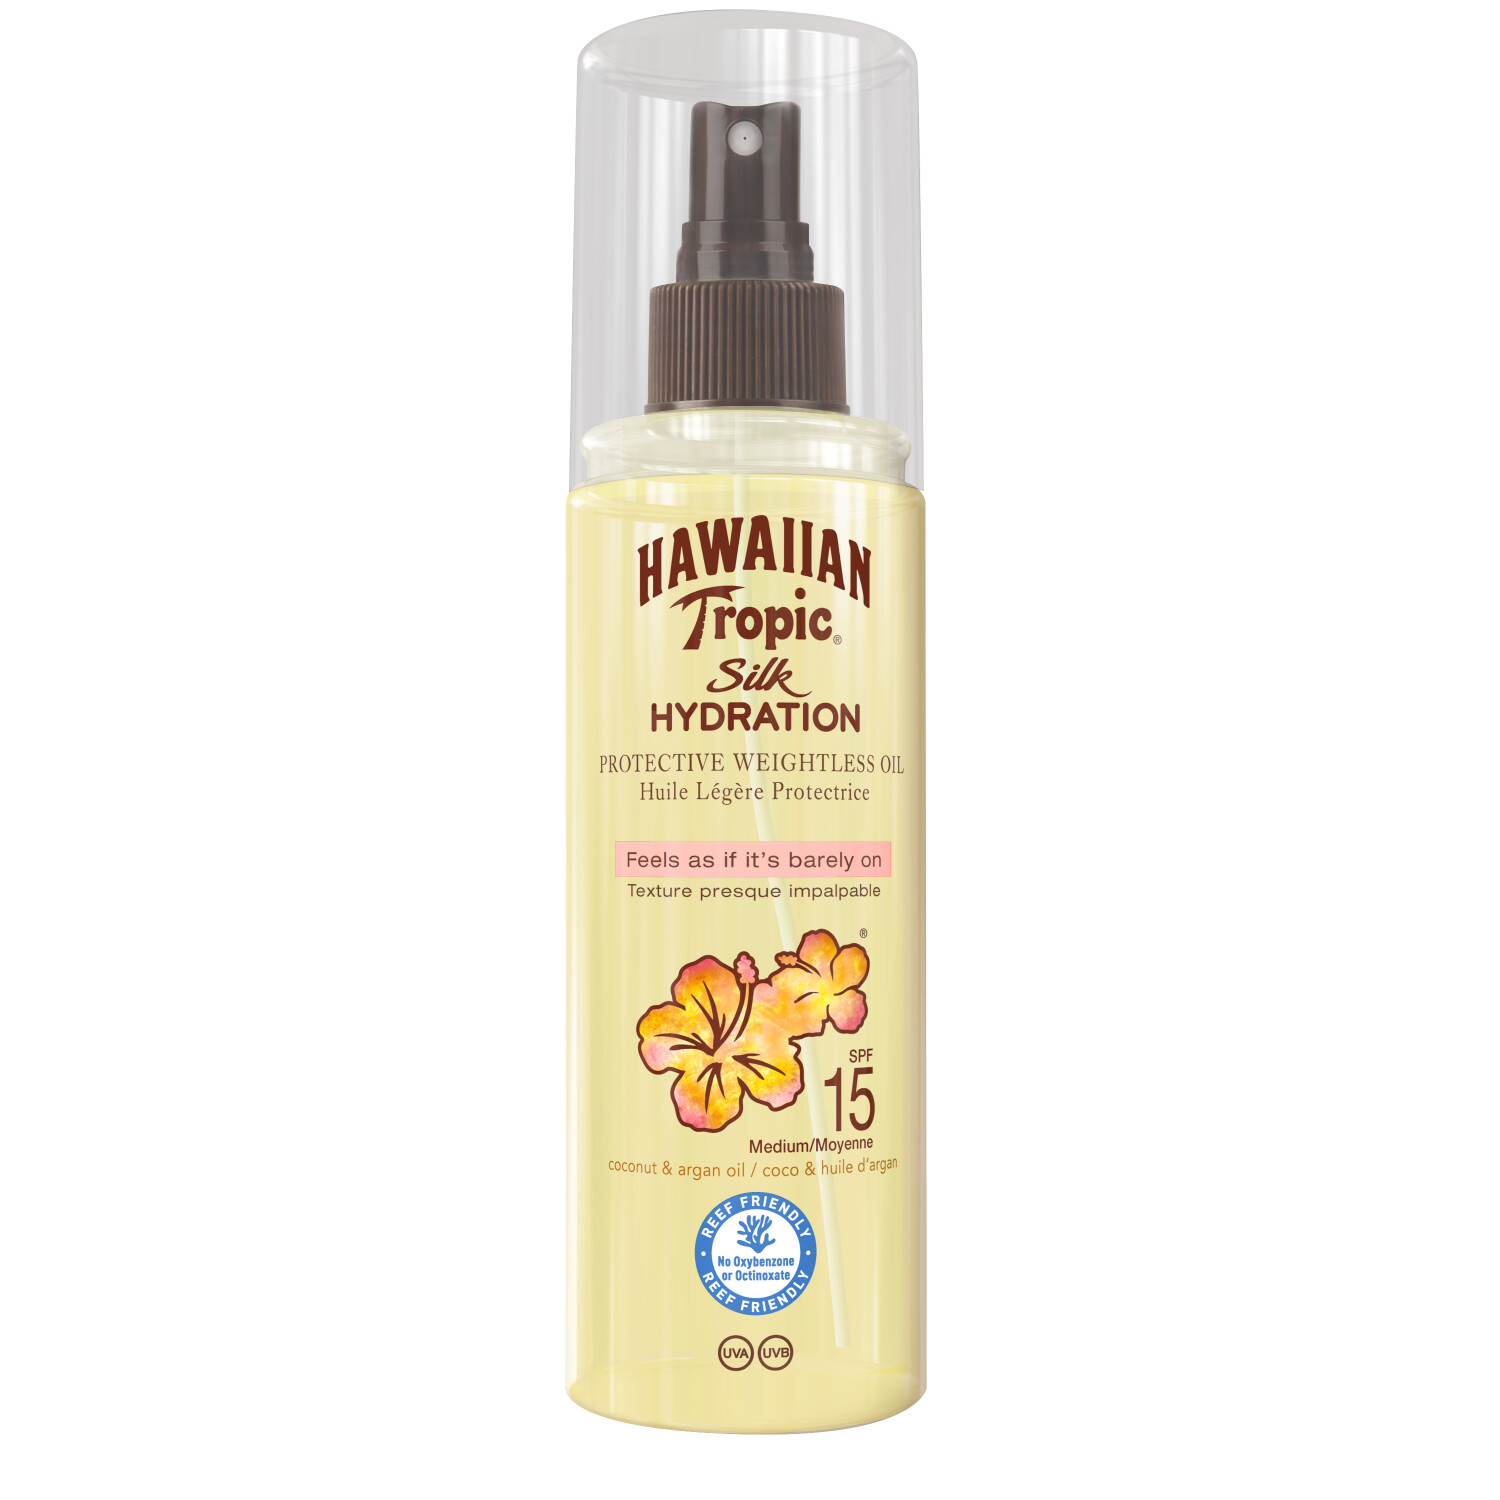 Photos - Sun Skin Care Hawaiian Tropic Hawaiian Tropic Silk Hydration Protective Weightless Oil S